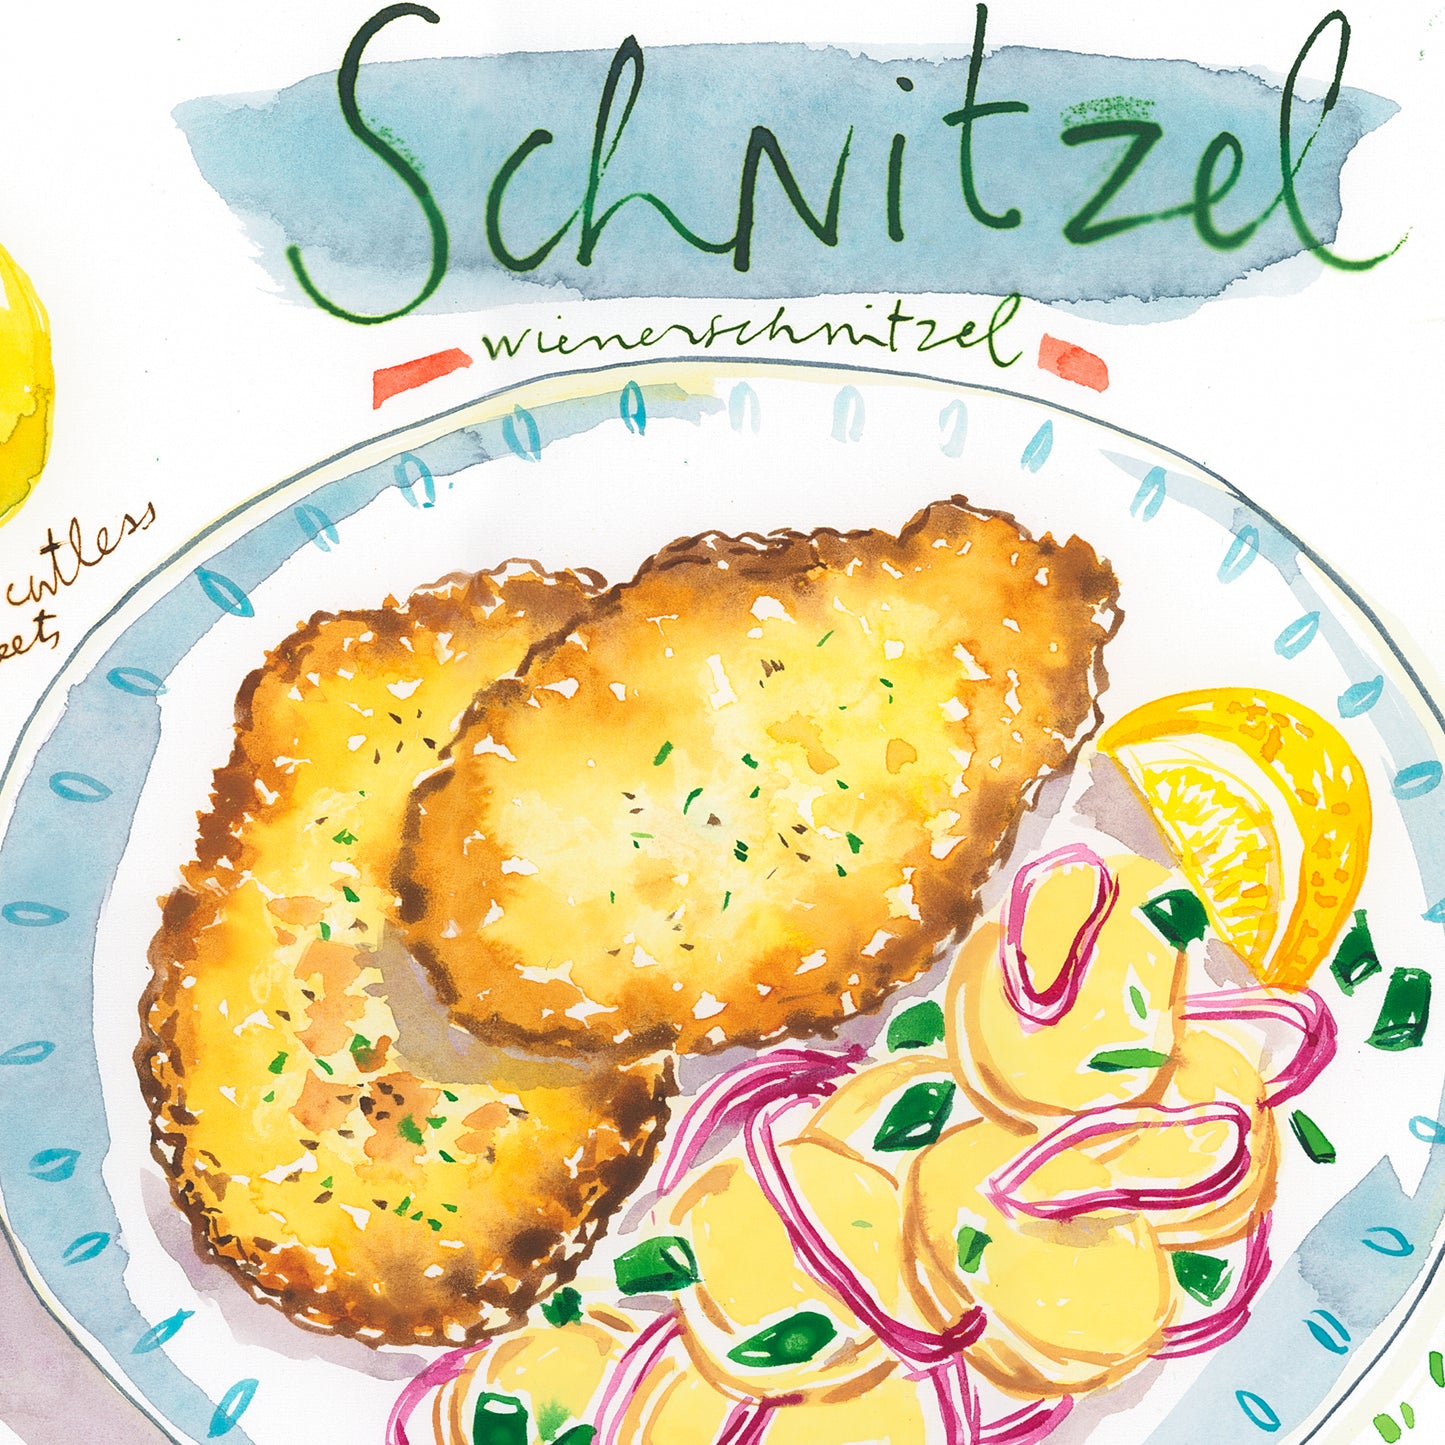 German Schnitzel recipe. Original watercolor painting